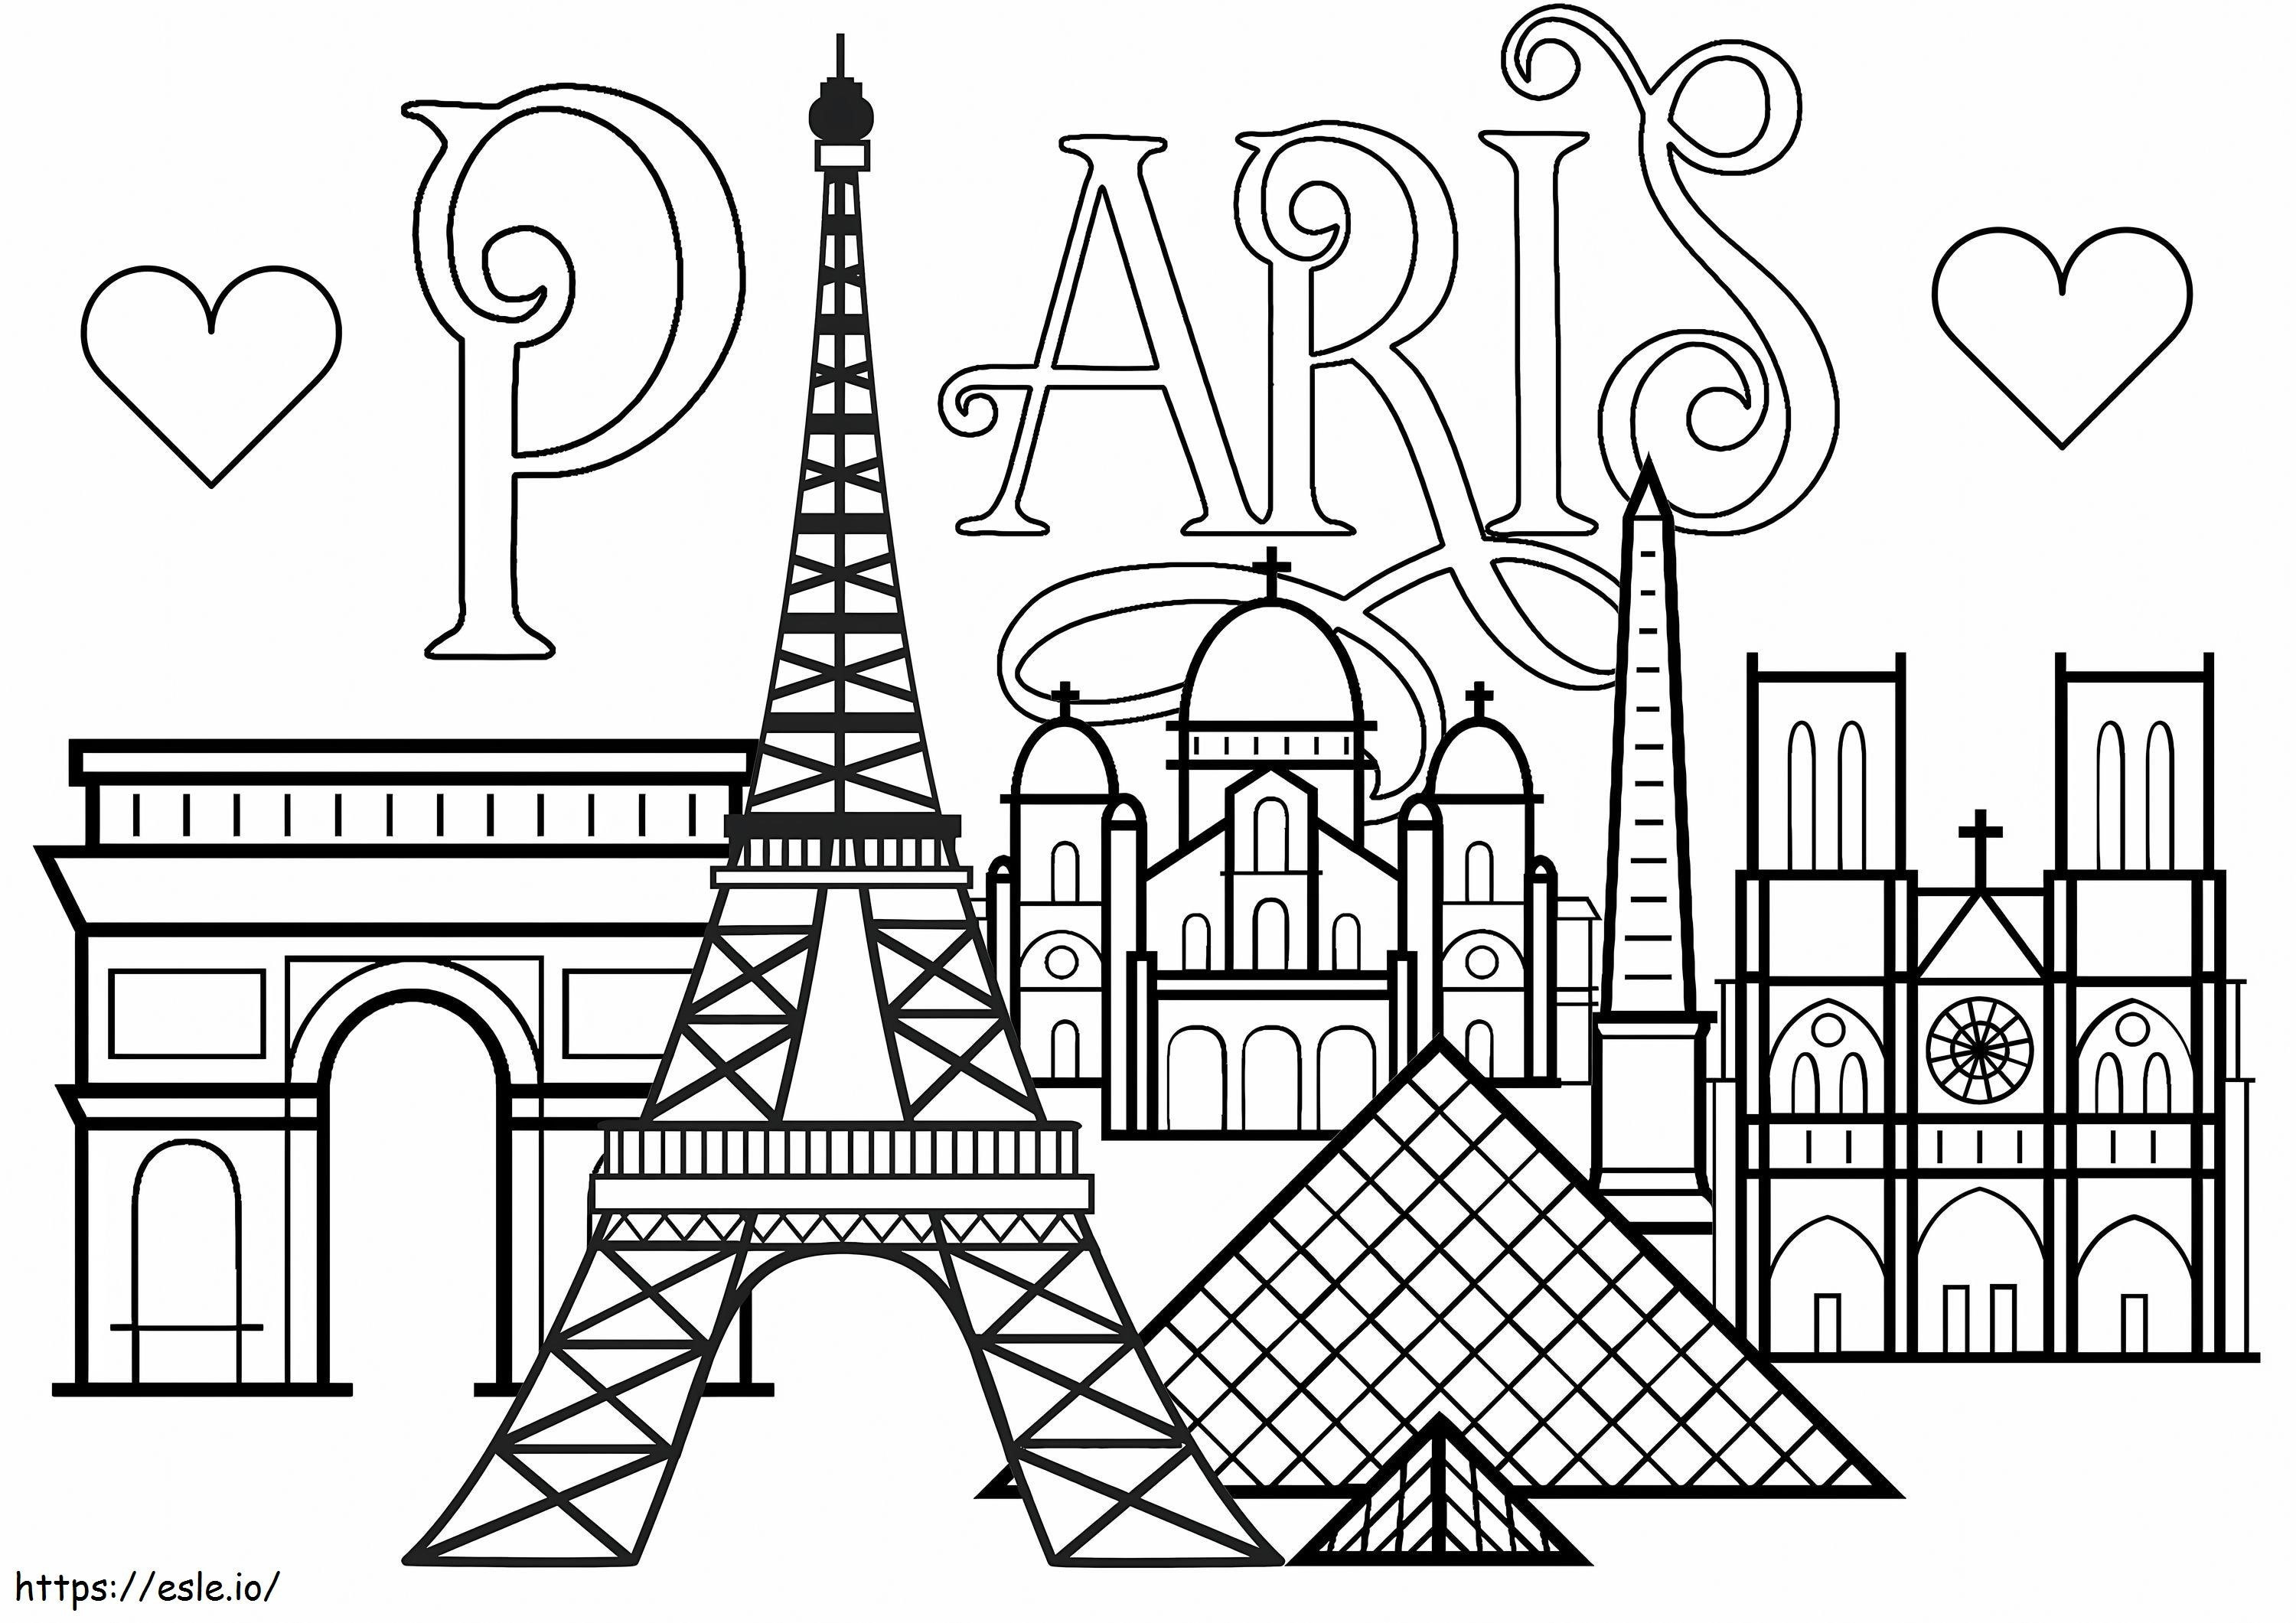 Paris Basico skaliert ausmalbilder